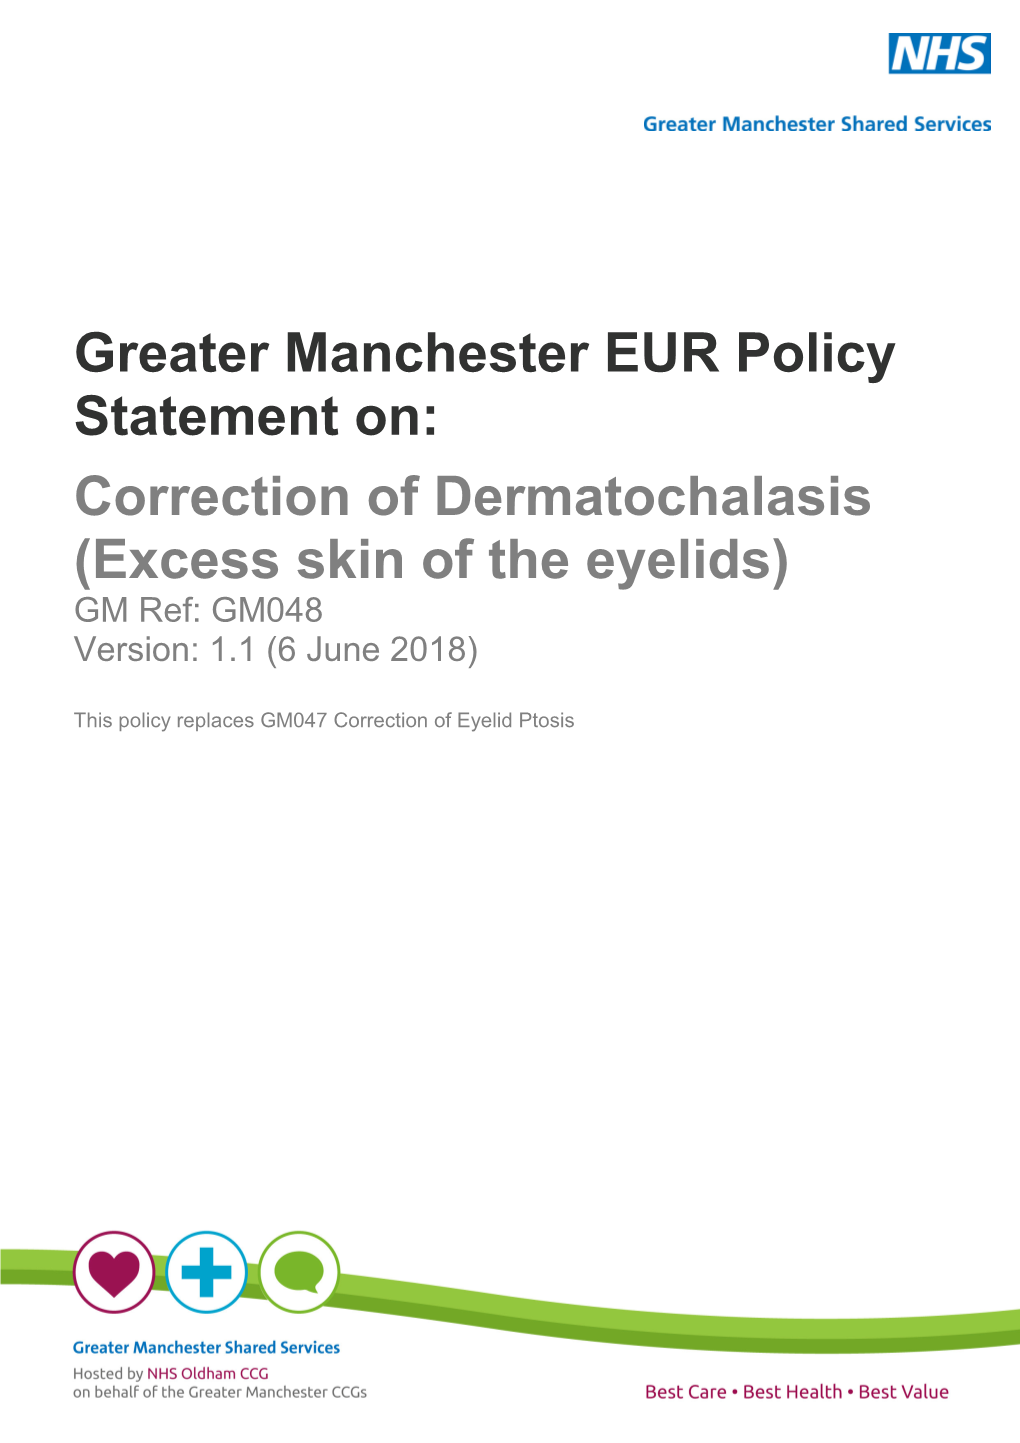 Correction of Dermatochalasis (Excess Skin of the Eyelids) GM Ref: GM048 Version: 1.1 (6 June 2018)